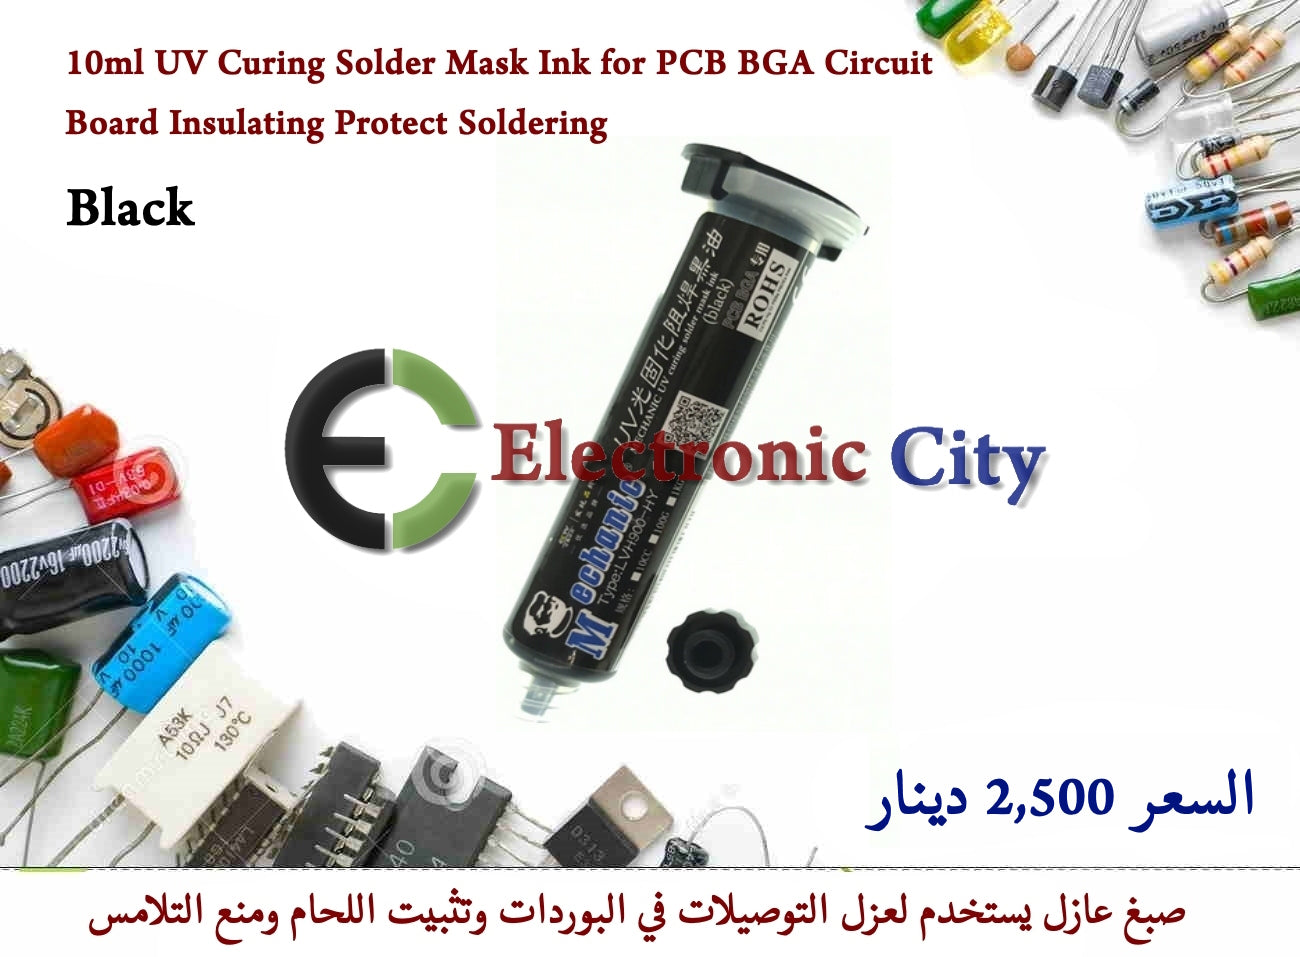 10ml UV Curing Solder Mask Ink for PCB BGA Circuit Board Insulating Protect Soldering Black